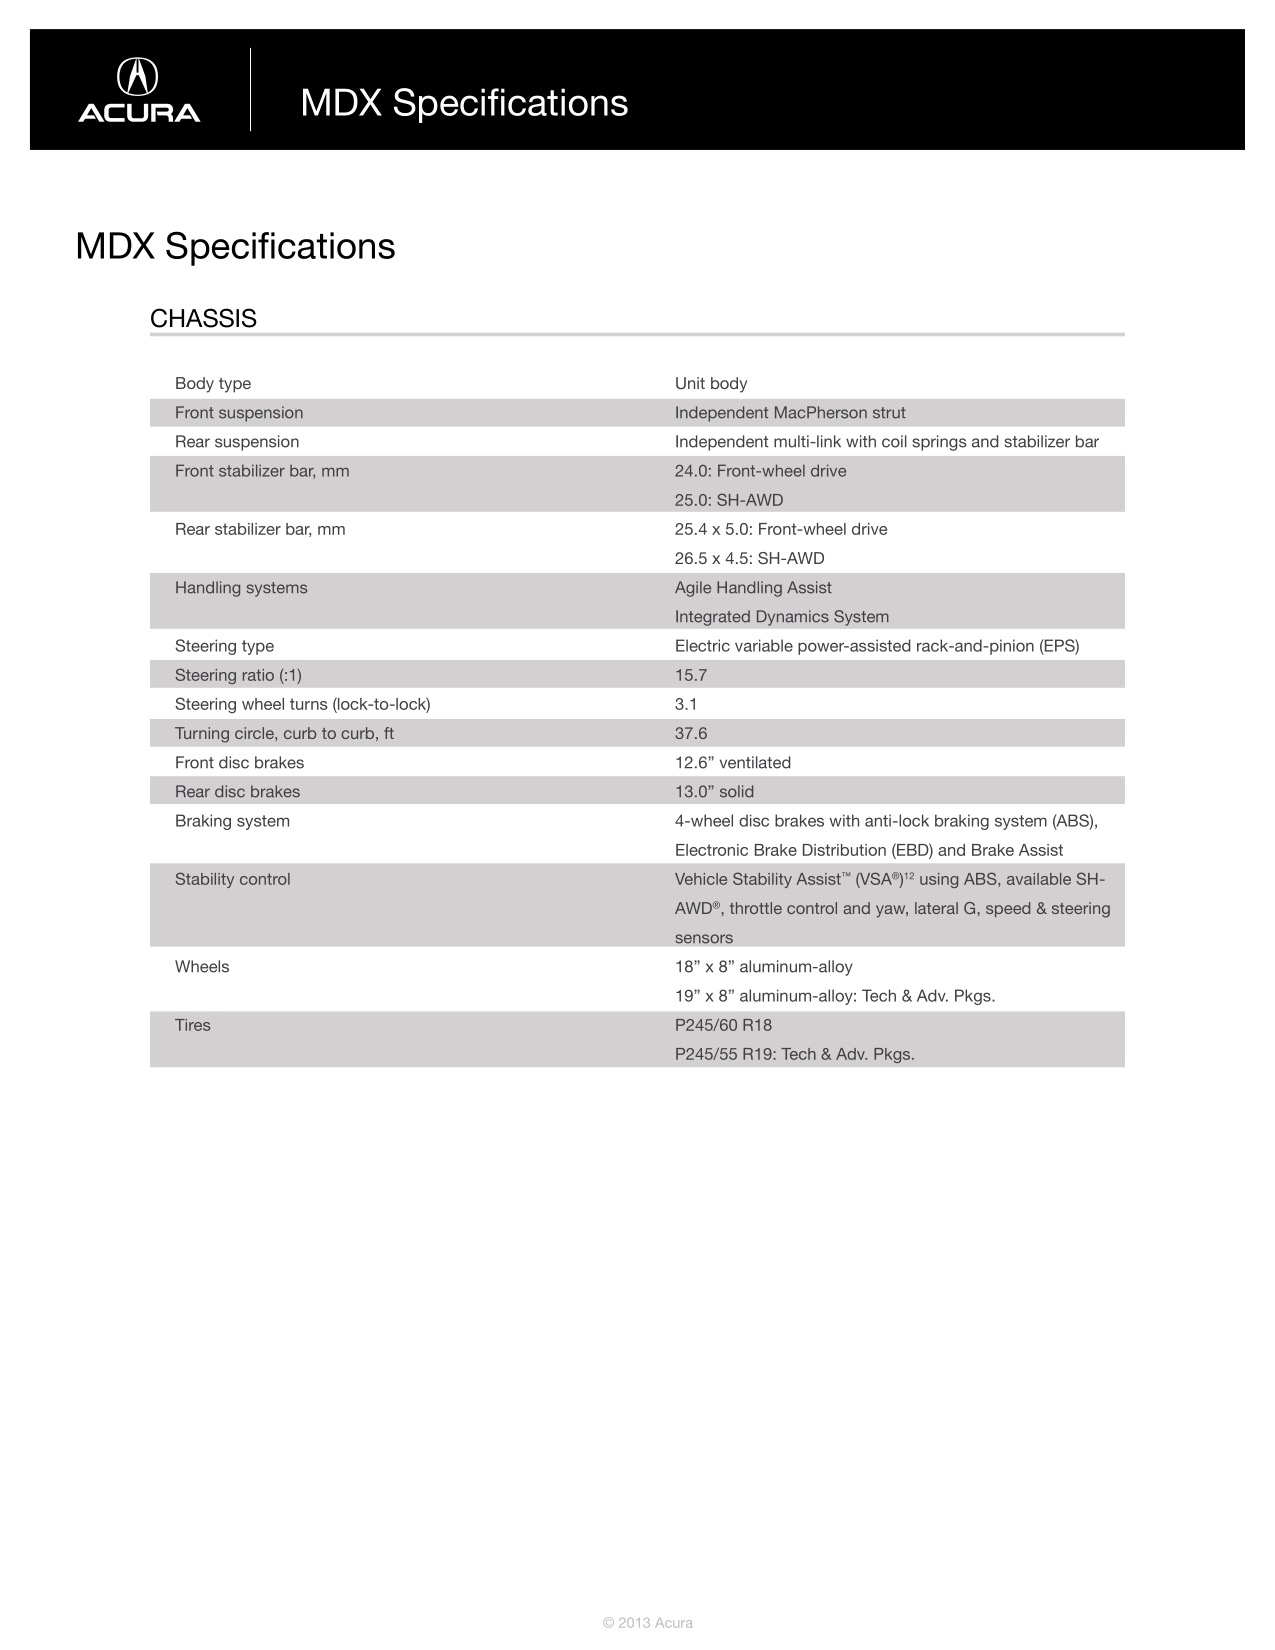 2014 Acura MDX Brochure Page 20